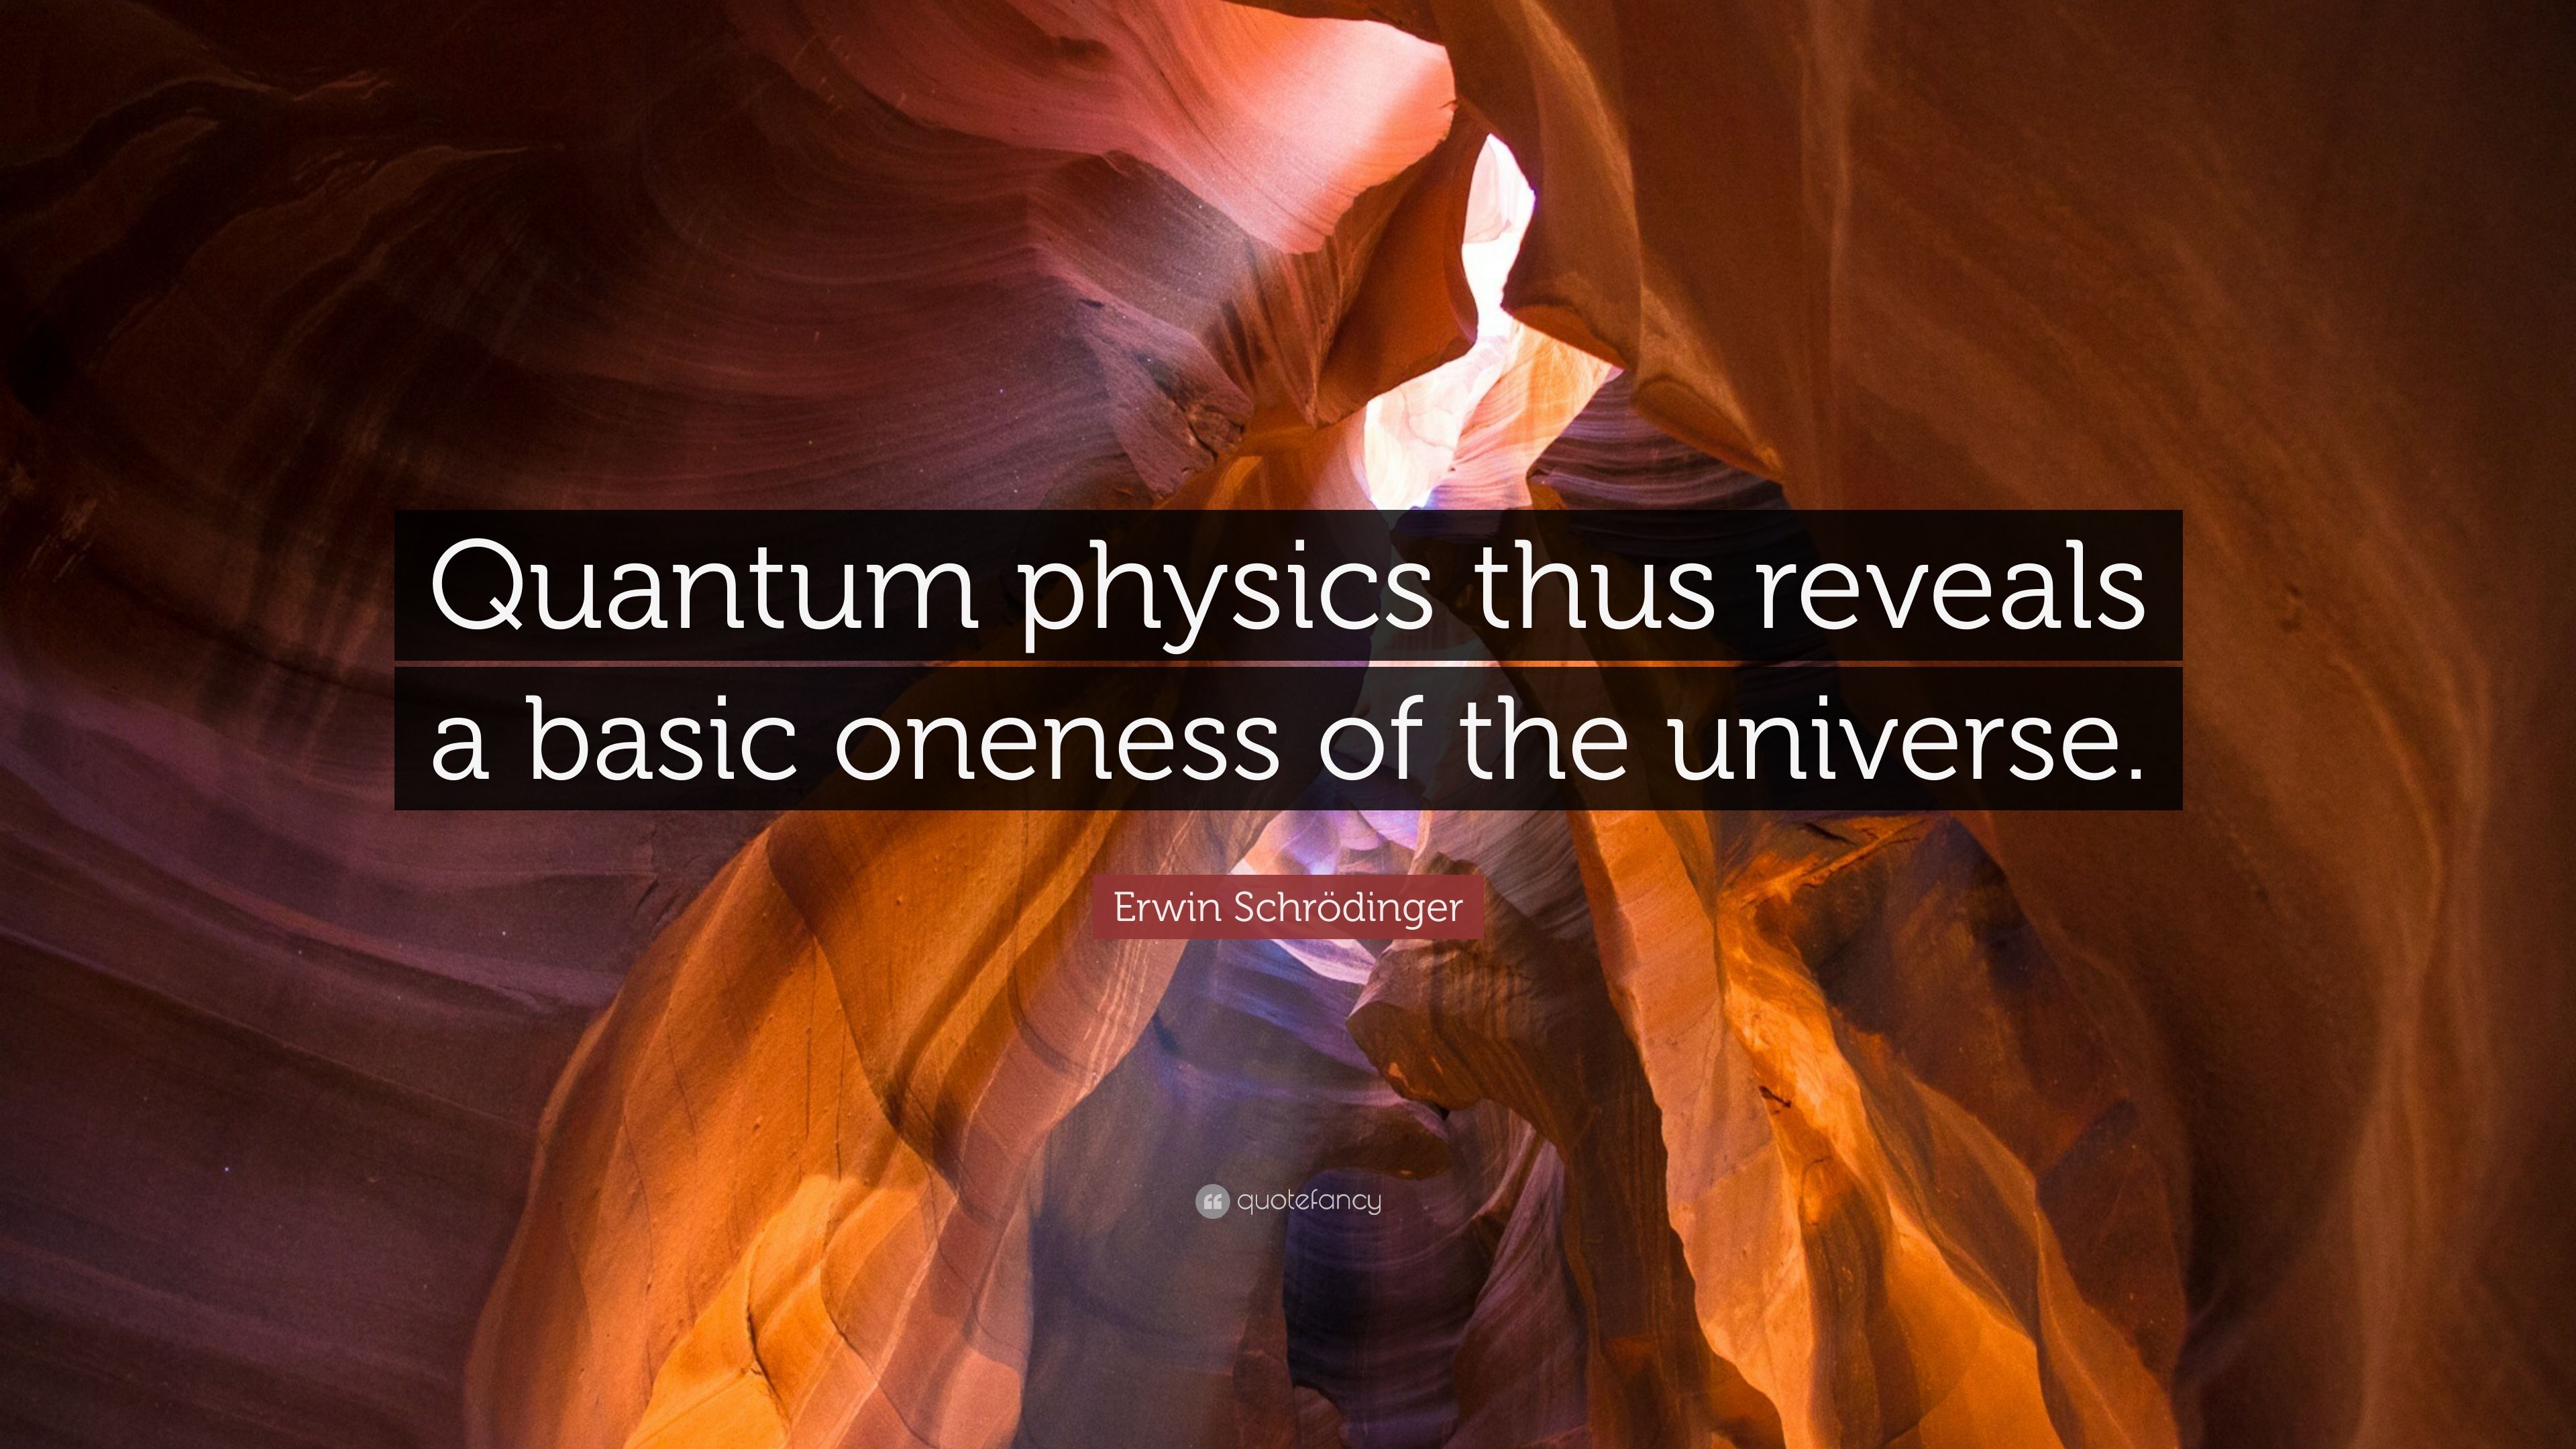 Quantum physics thus reveals a basic .quotefancy.com